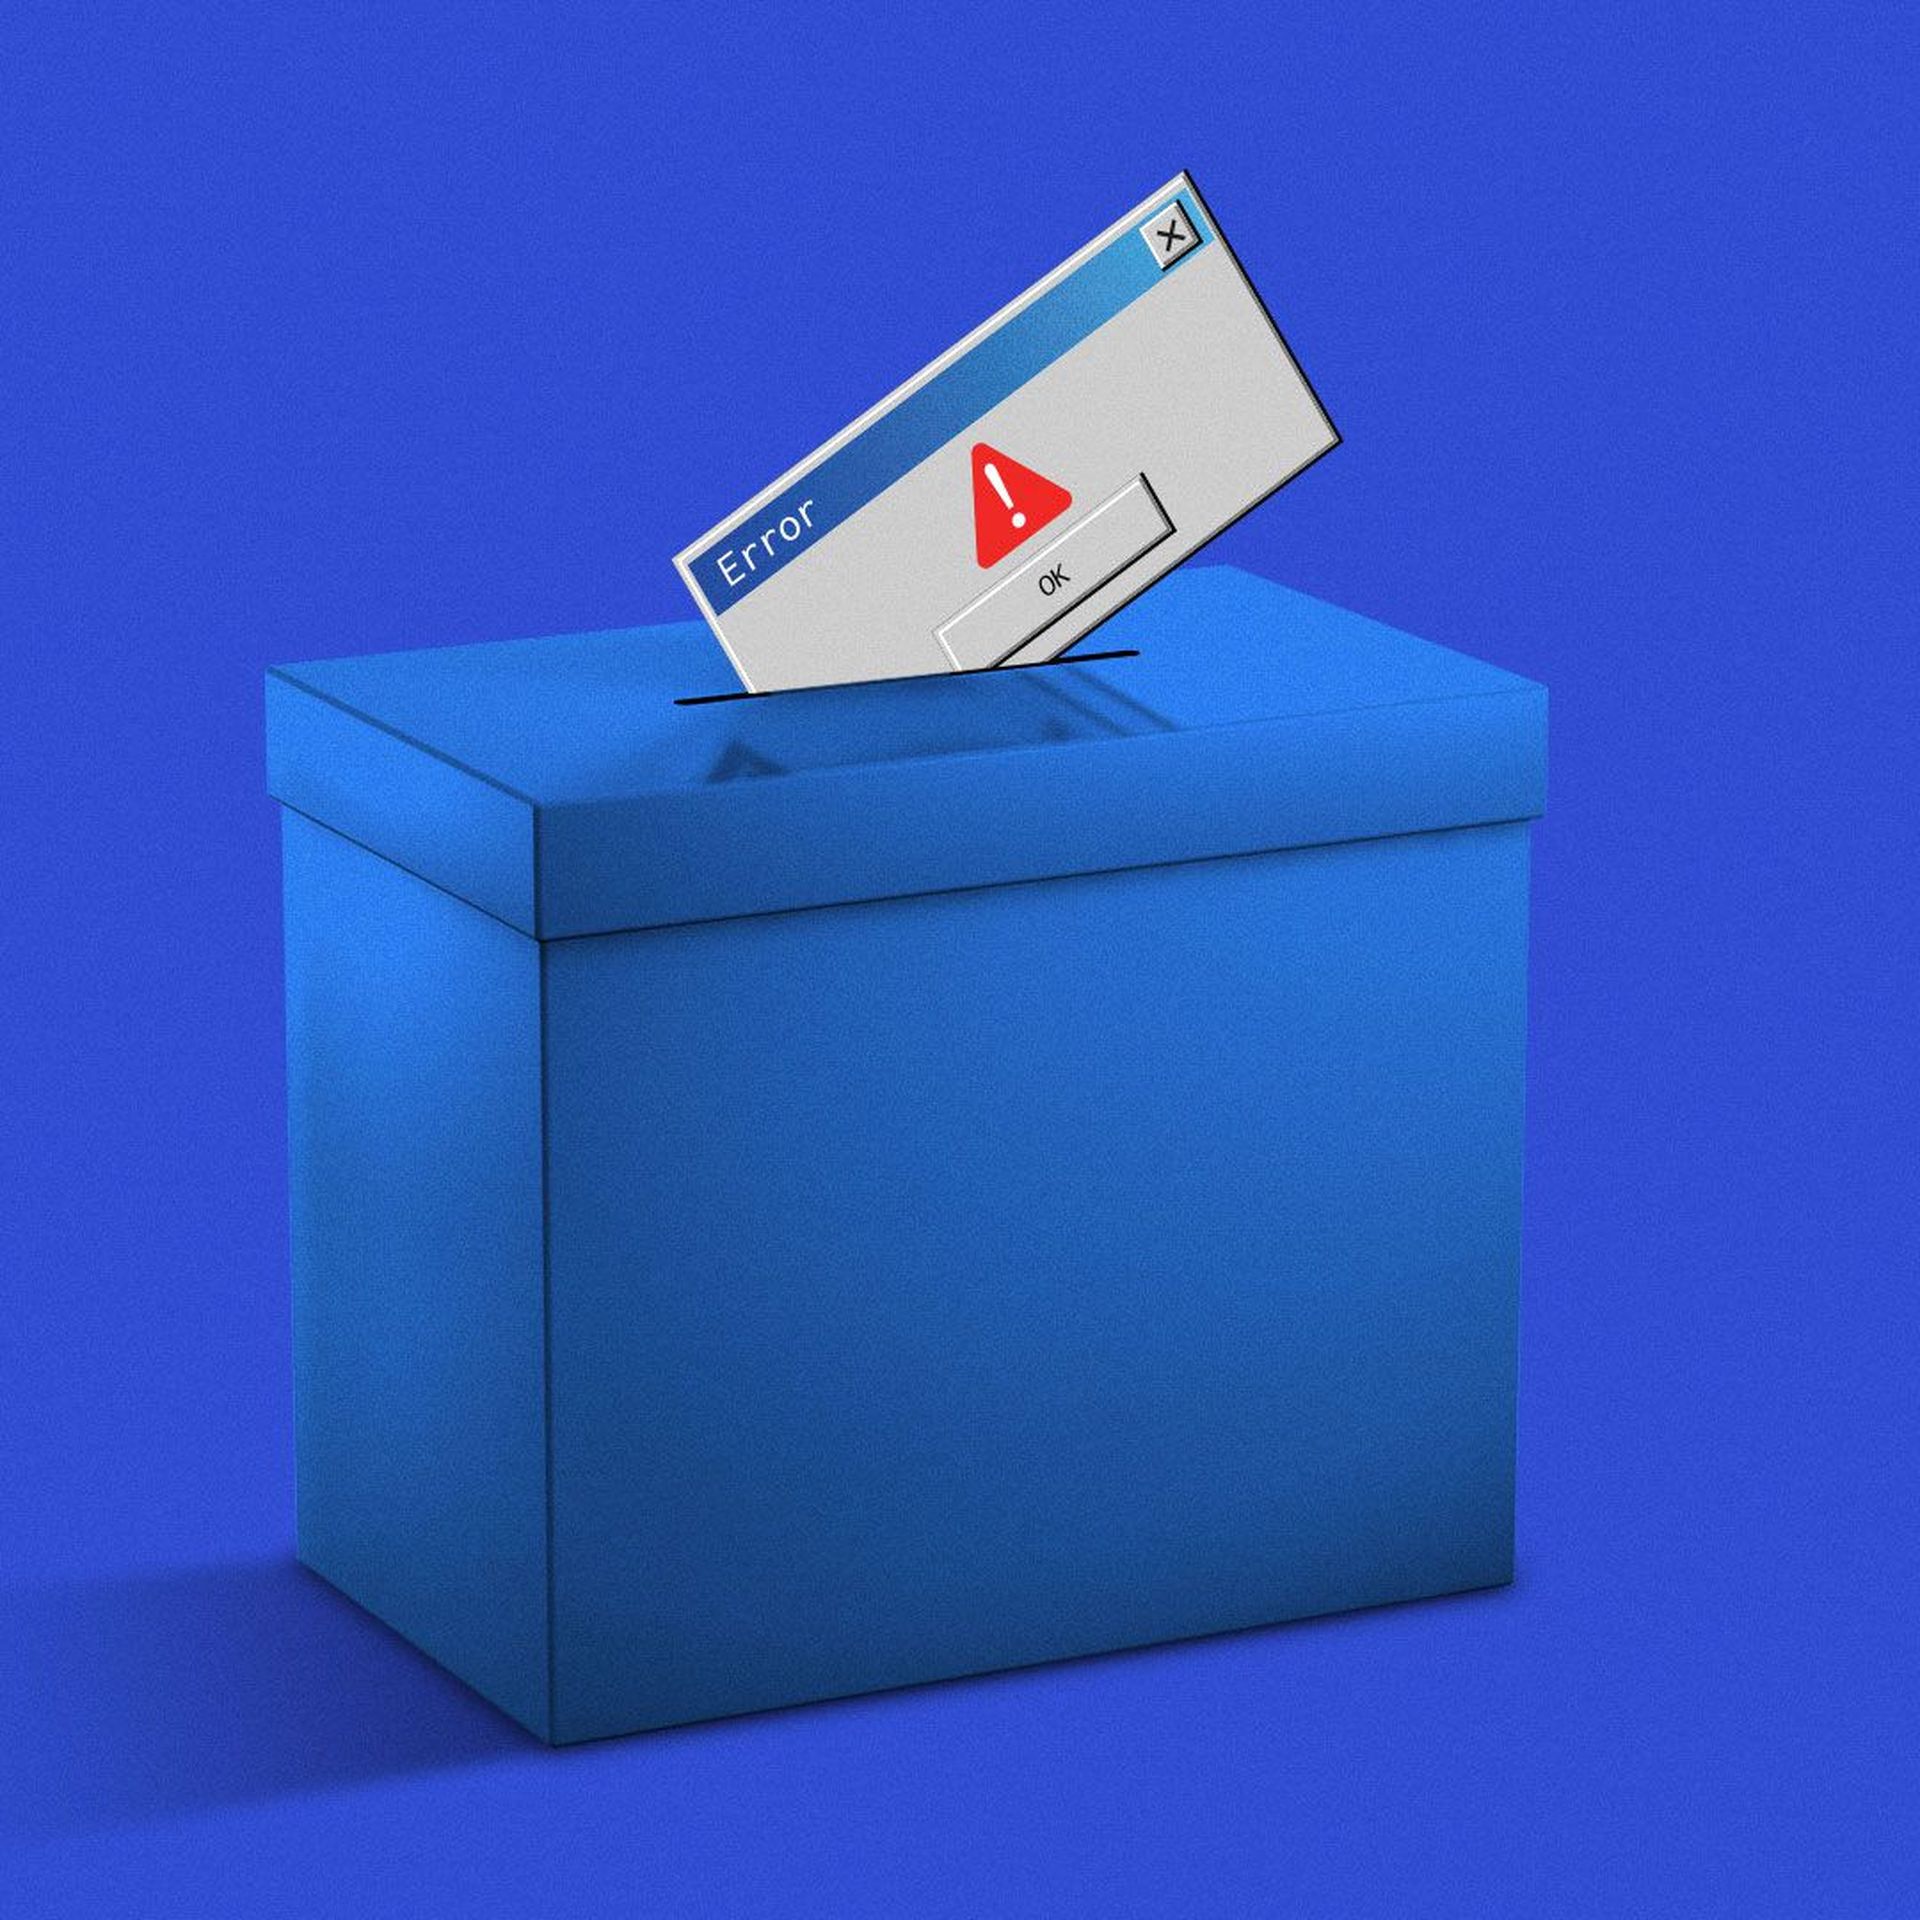 Illustration of error pop-up in the ballot box slot